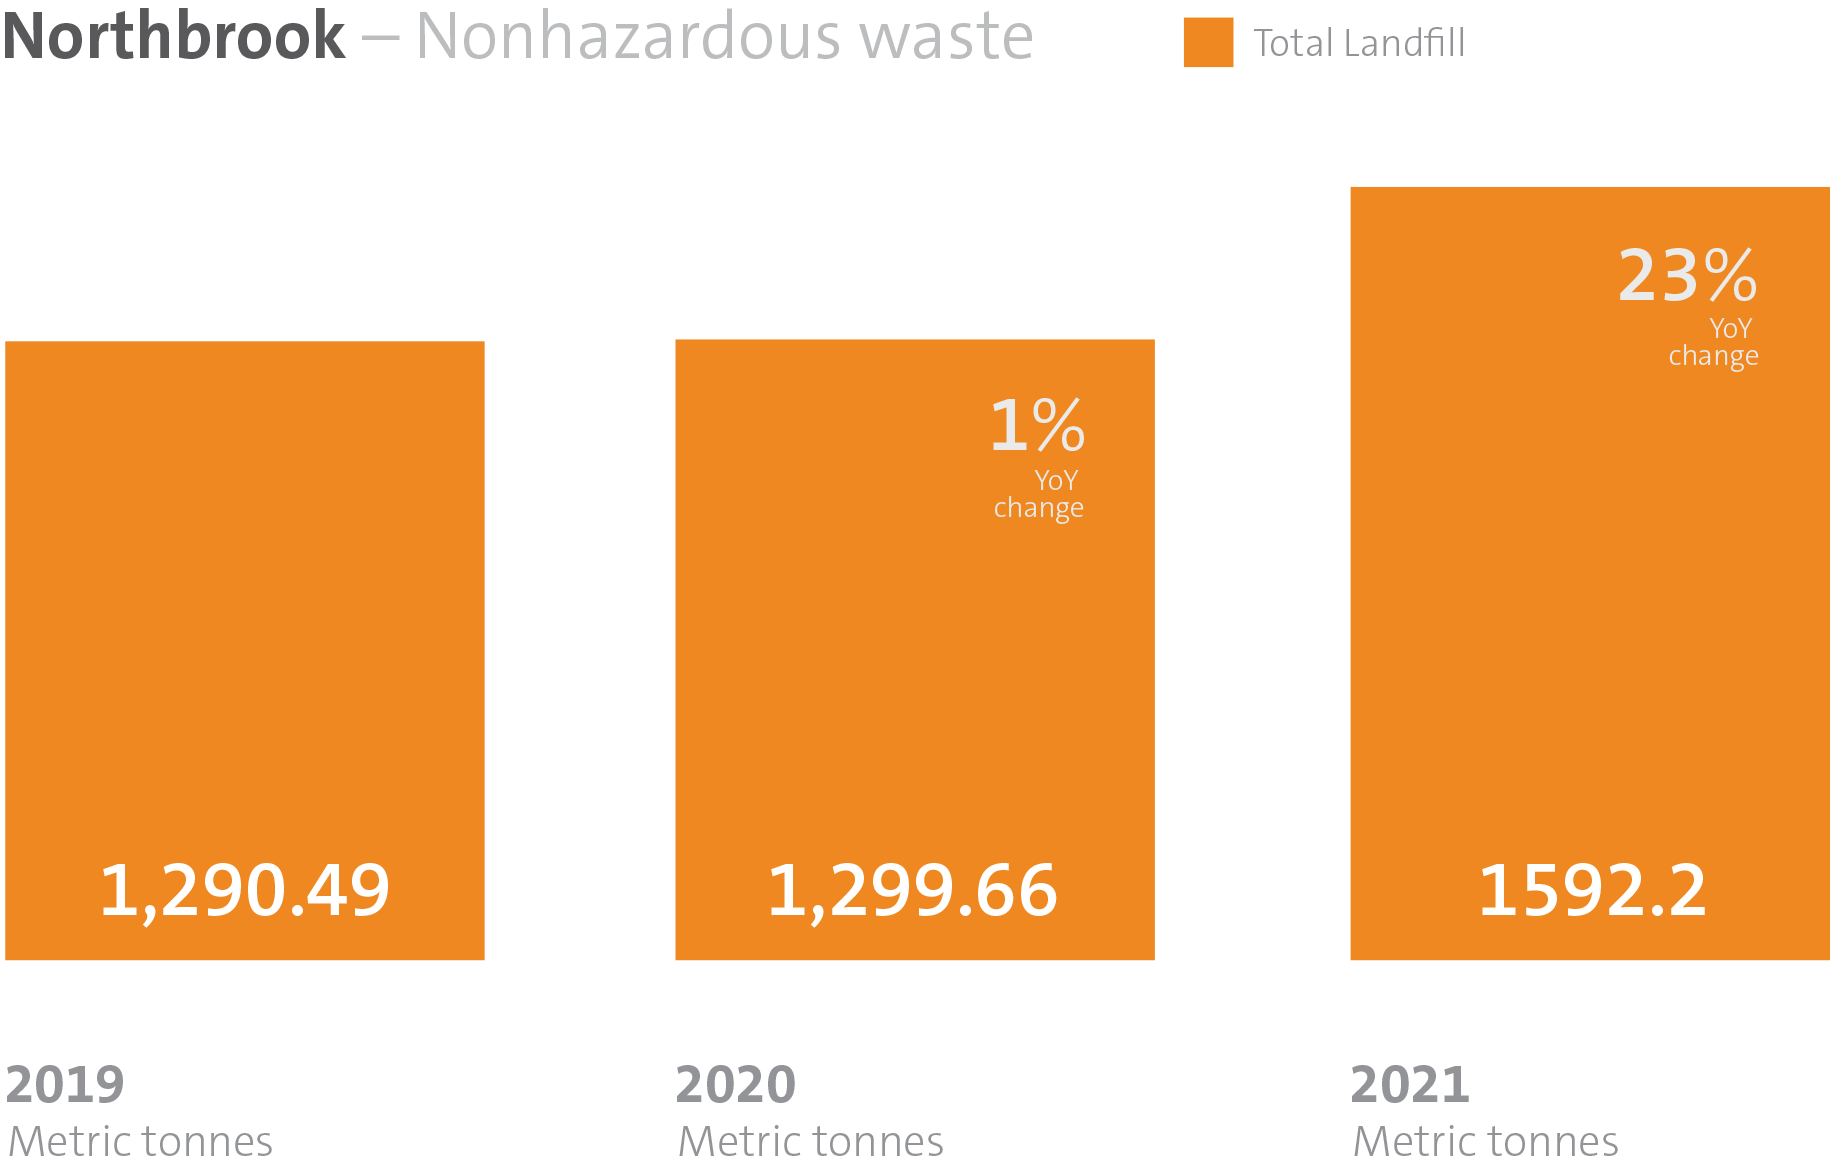 UL-NON-HAZARDOUS WASTE-NORTHBROOK-Total-landfill